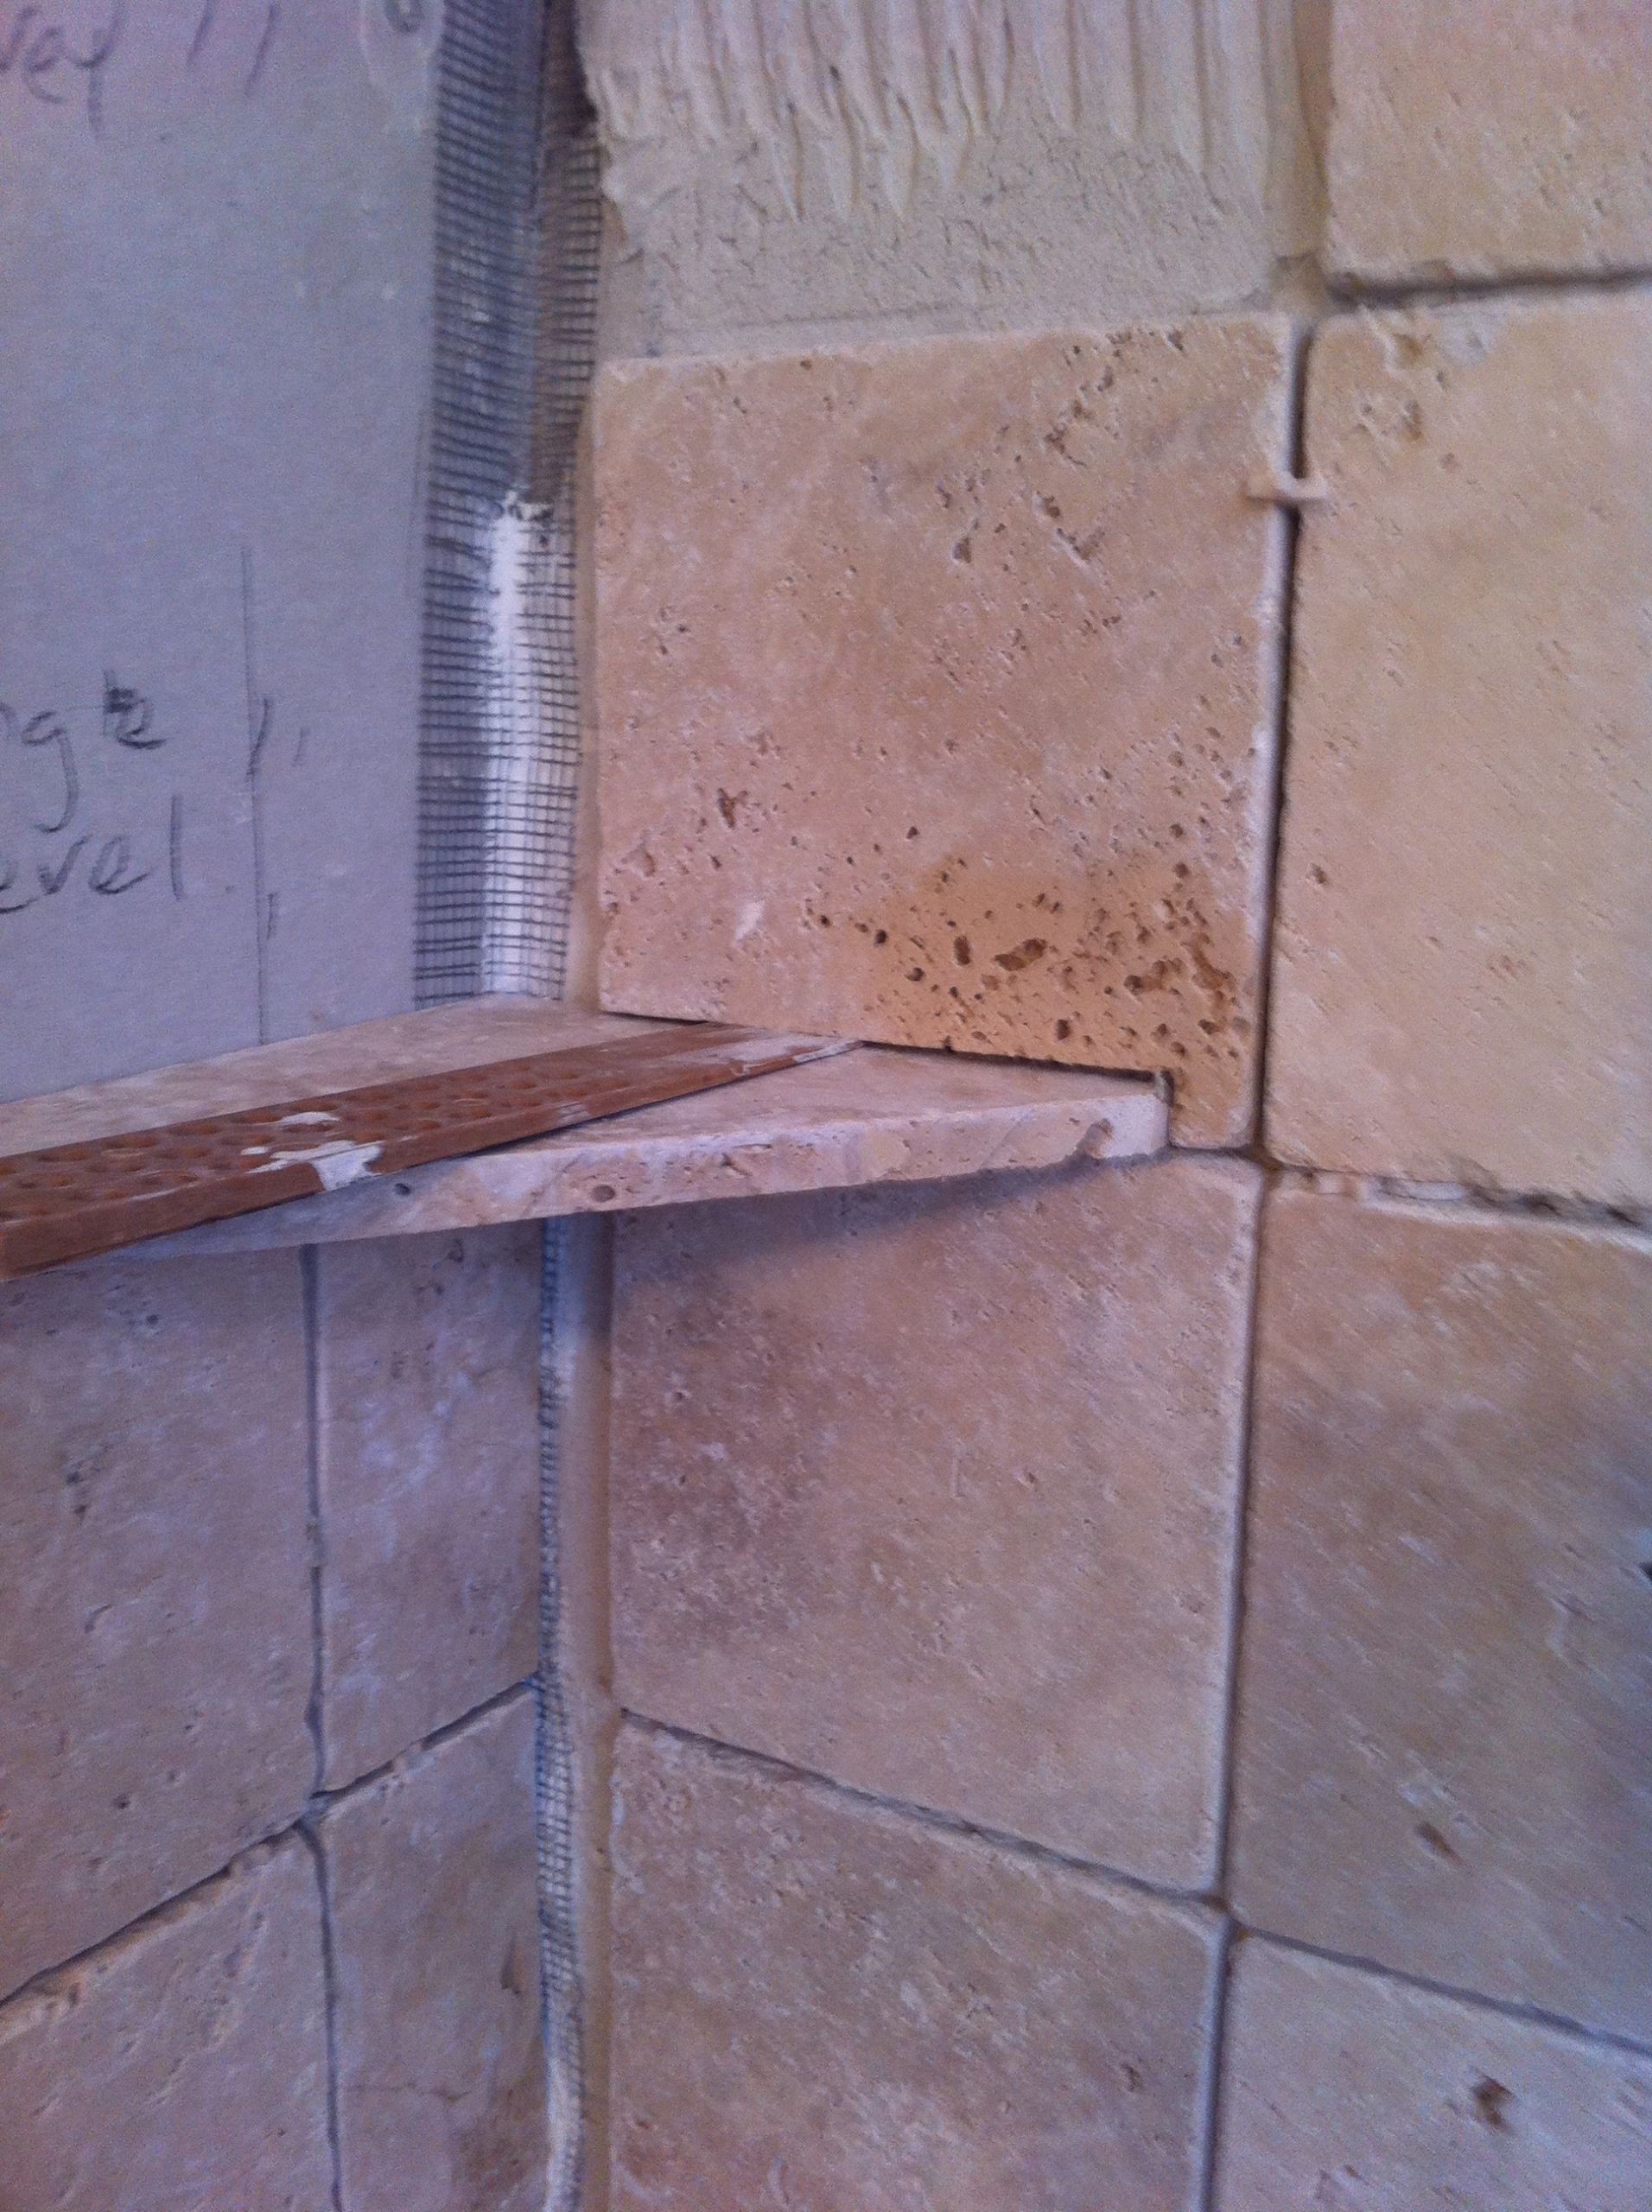 Bathroom Tile Shelves
 How to make a corner shower shelf using tile